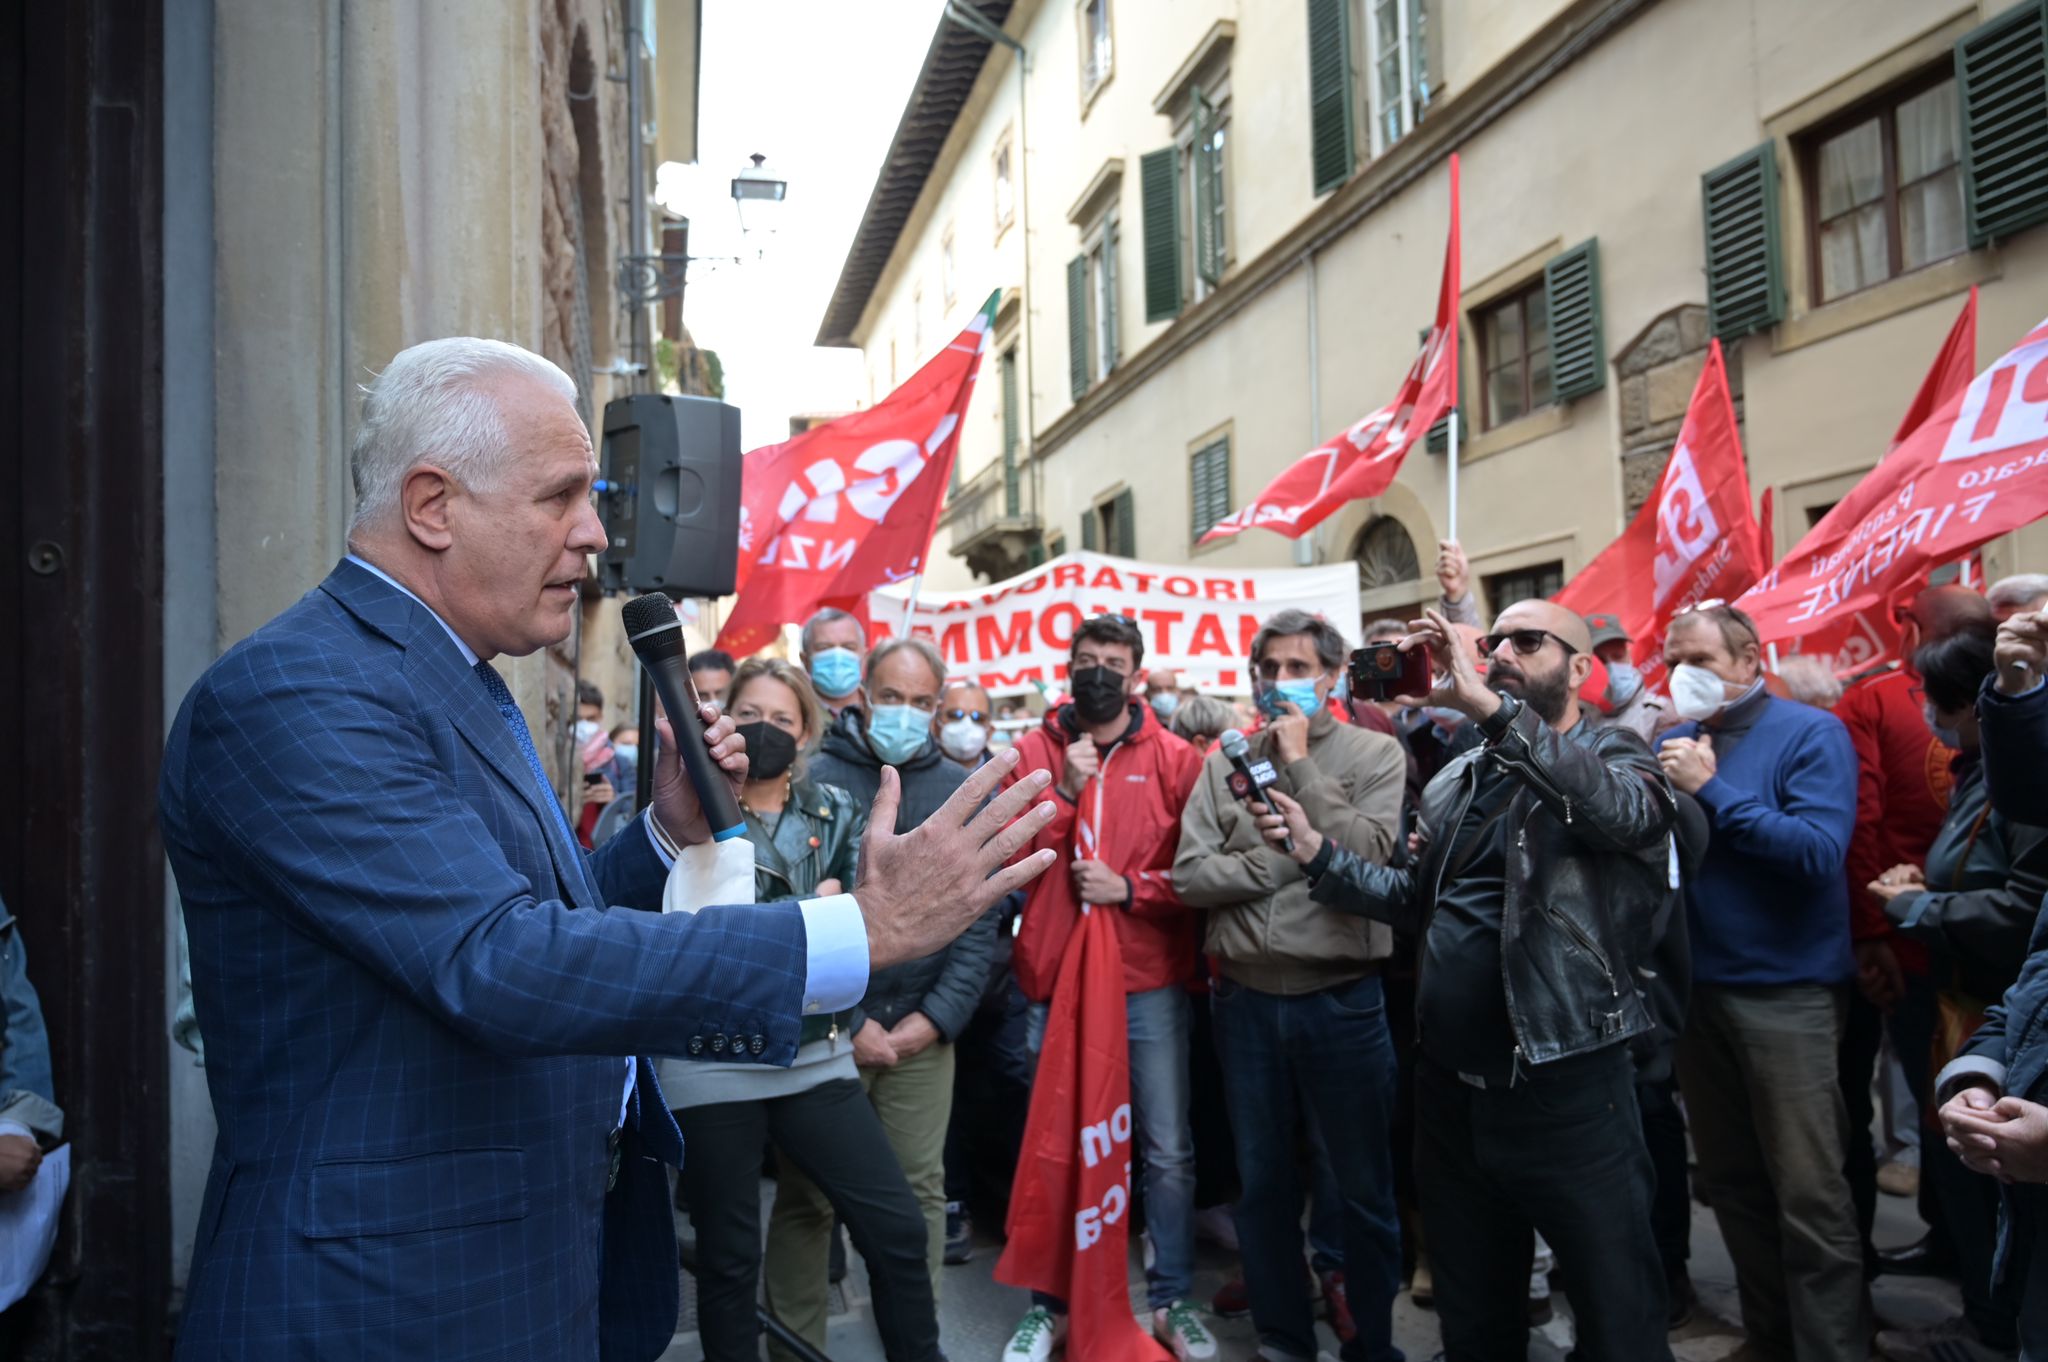 Giani alla manifestazione (Fonte foto Regione Toscana)